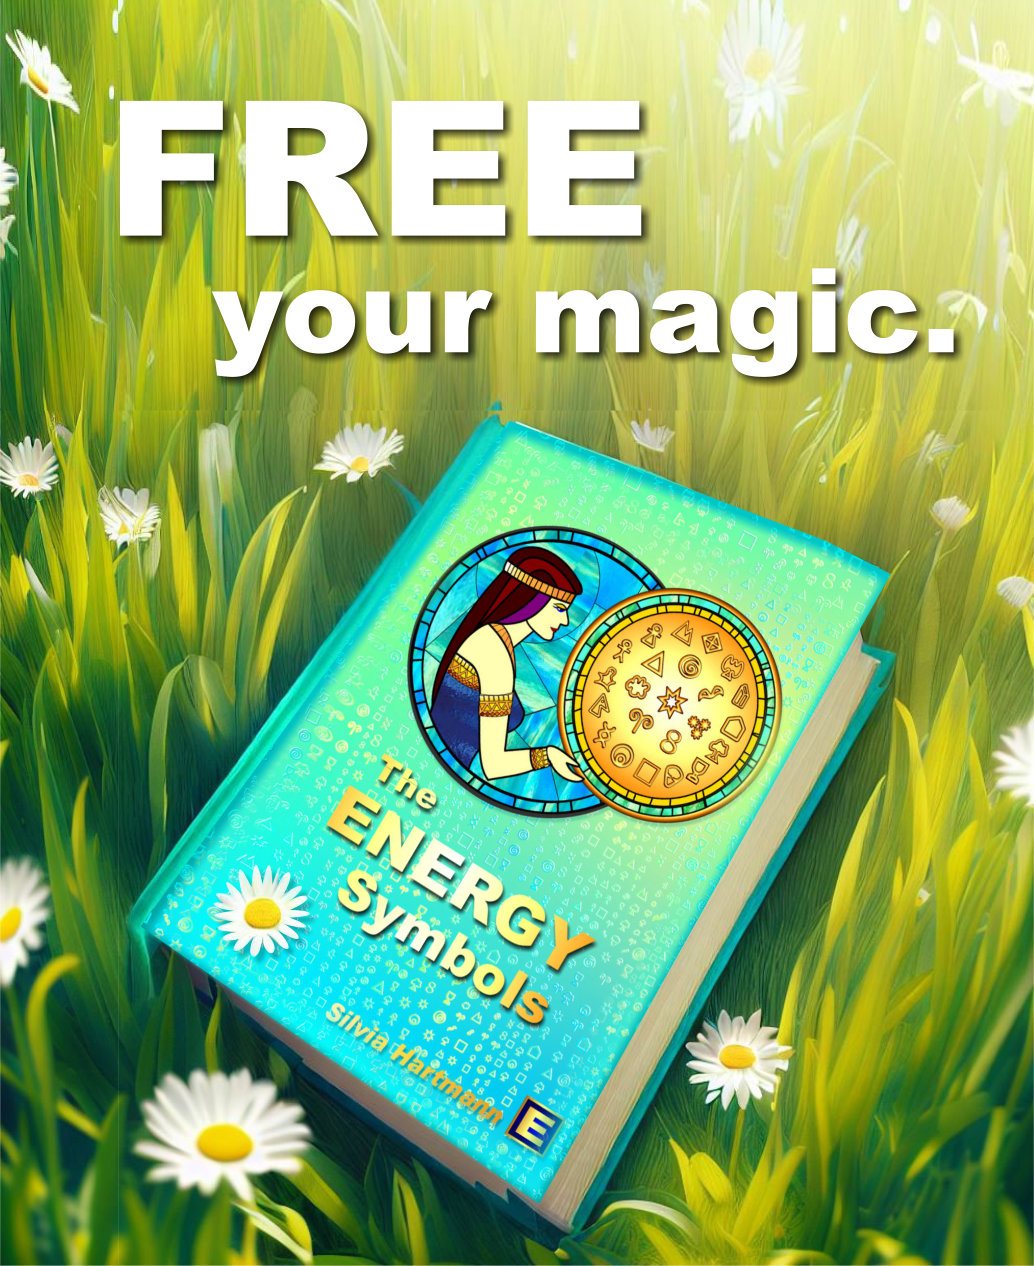 The Energy Symbols FREE YOUR MAGIC daisy poster